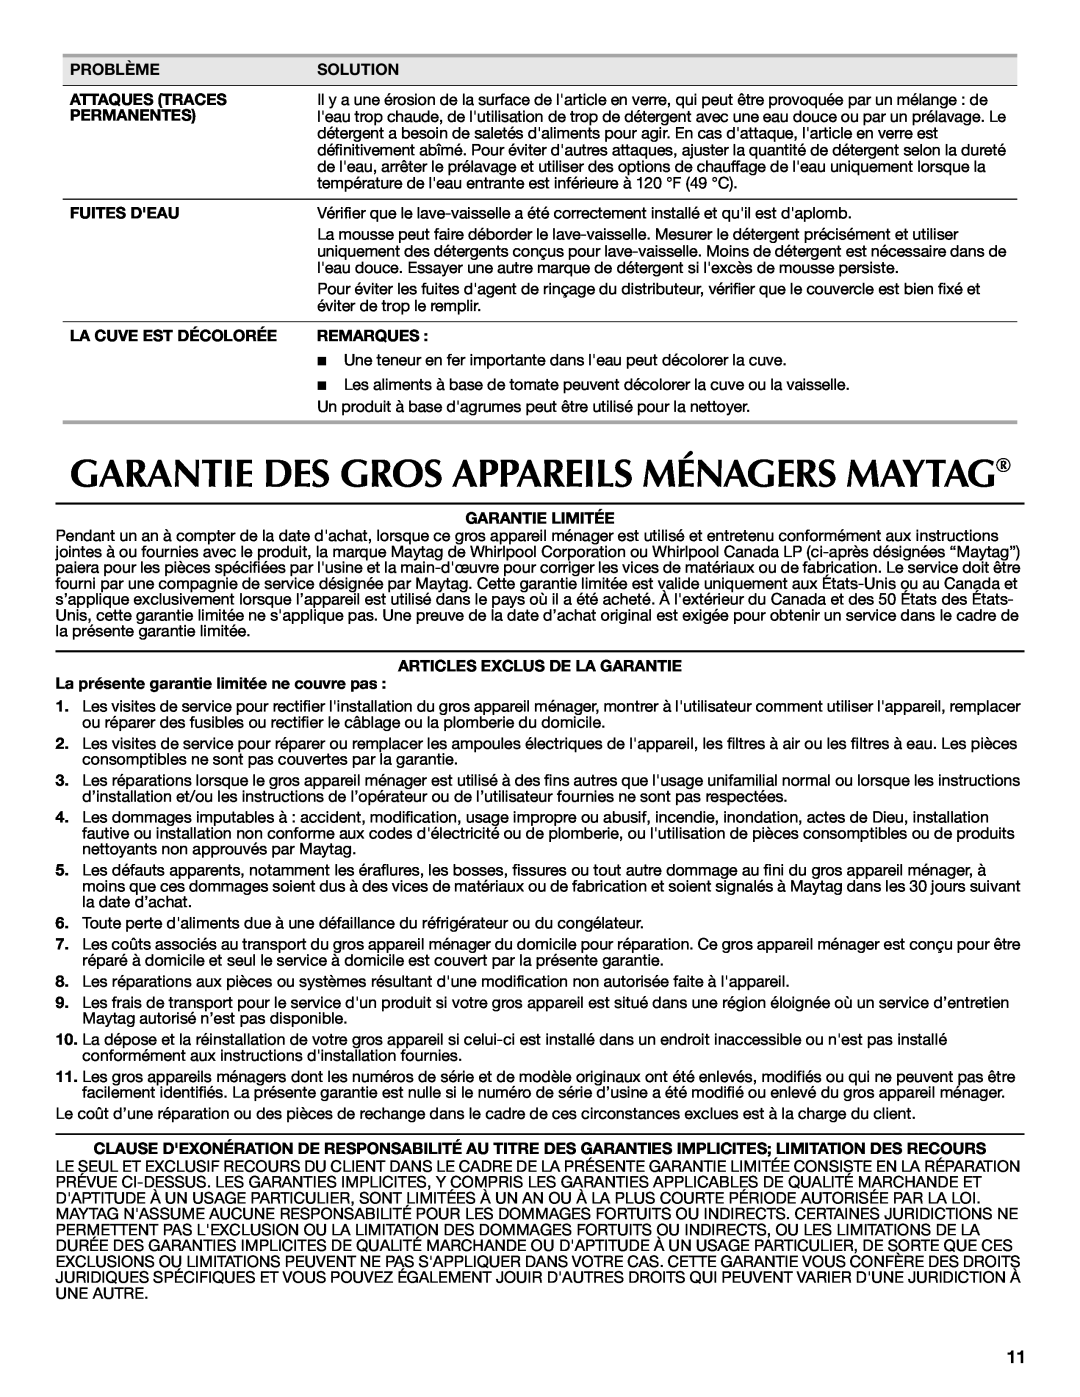 Maytag MDB7809AWM Garantie Des Gros Appareils Ménagers Maytag, Problème, Solution, Attaques Traces, Permanentes, Remarques 